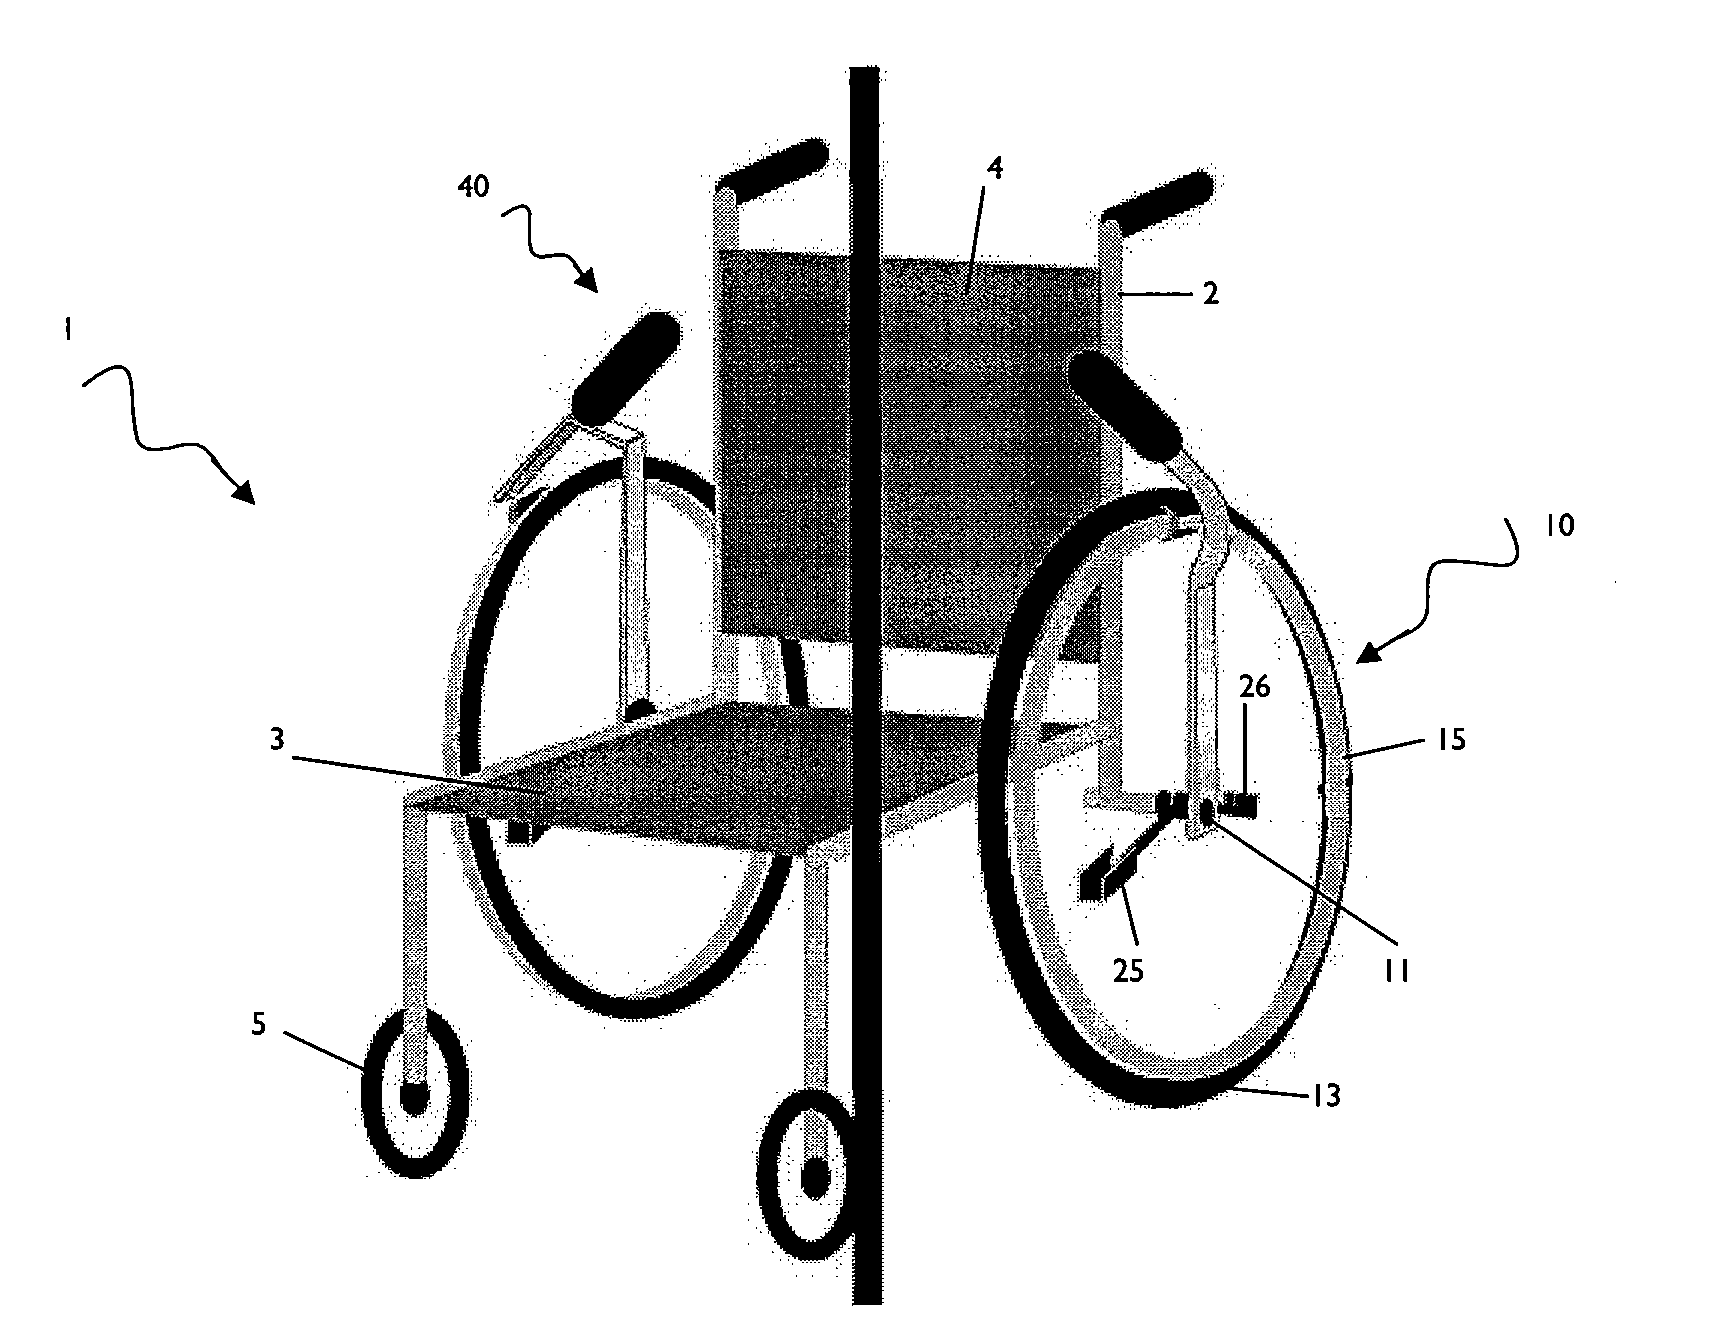 Ergonomic wheelchair propulsion system